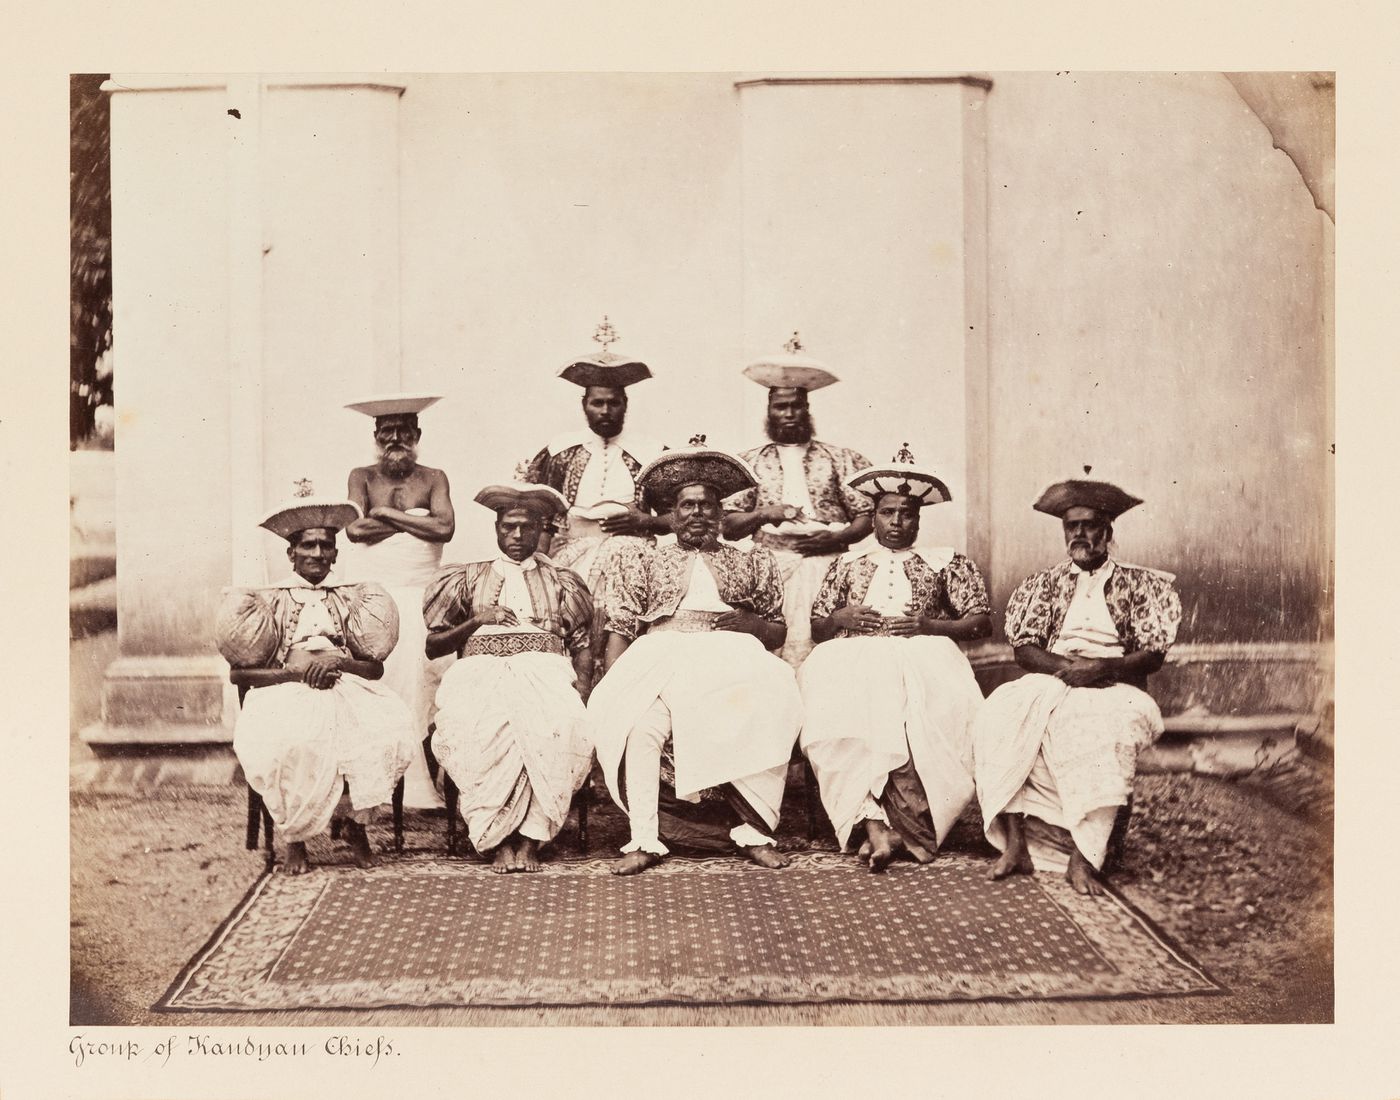 Group portrait of Kandyan Chiefs, Kandy, Ceylon (now Sri Lanka)